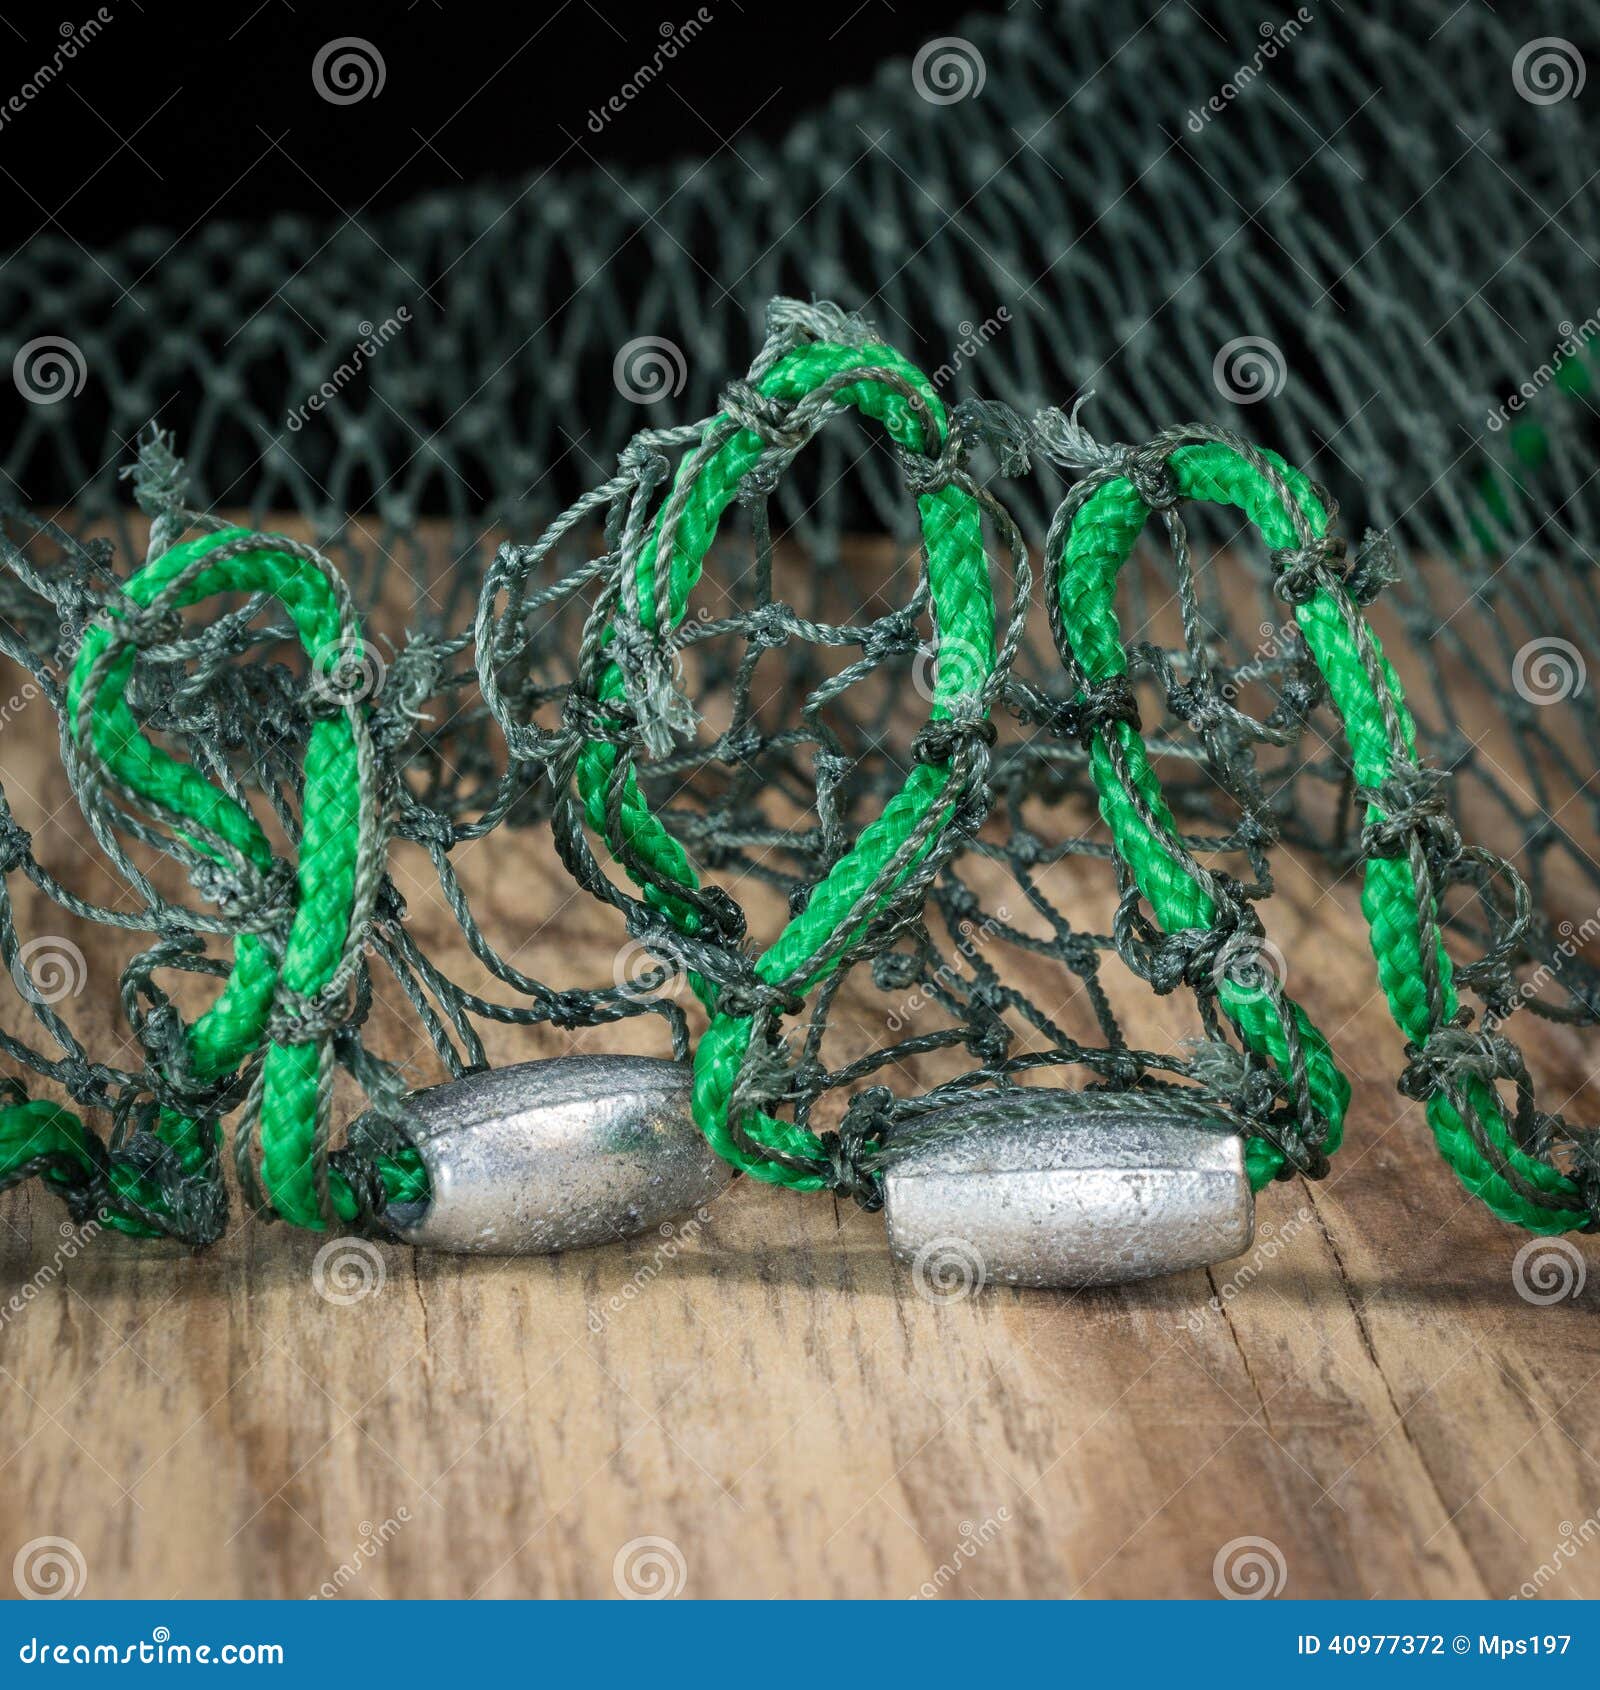 Fishing net weights stock photo. Image of knots, bottom - 40977372